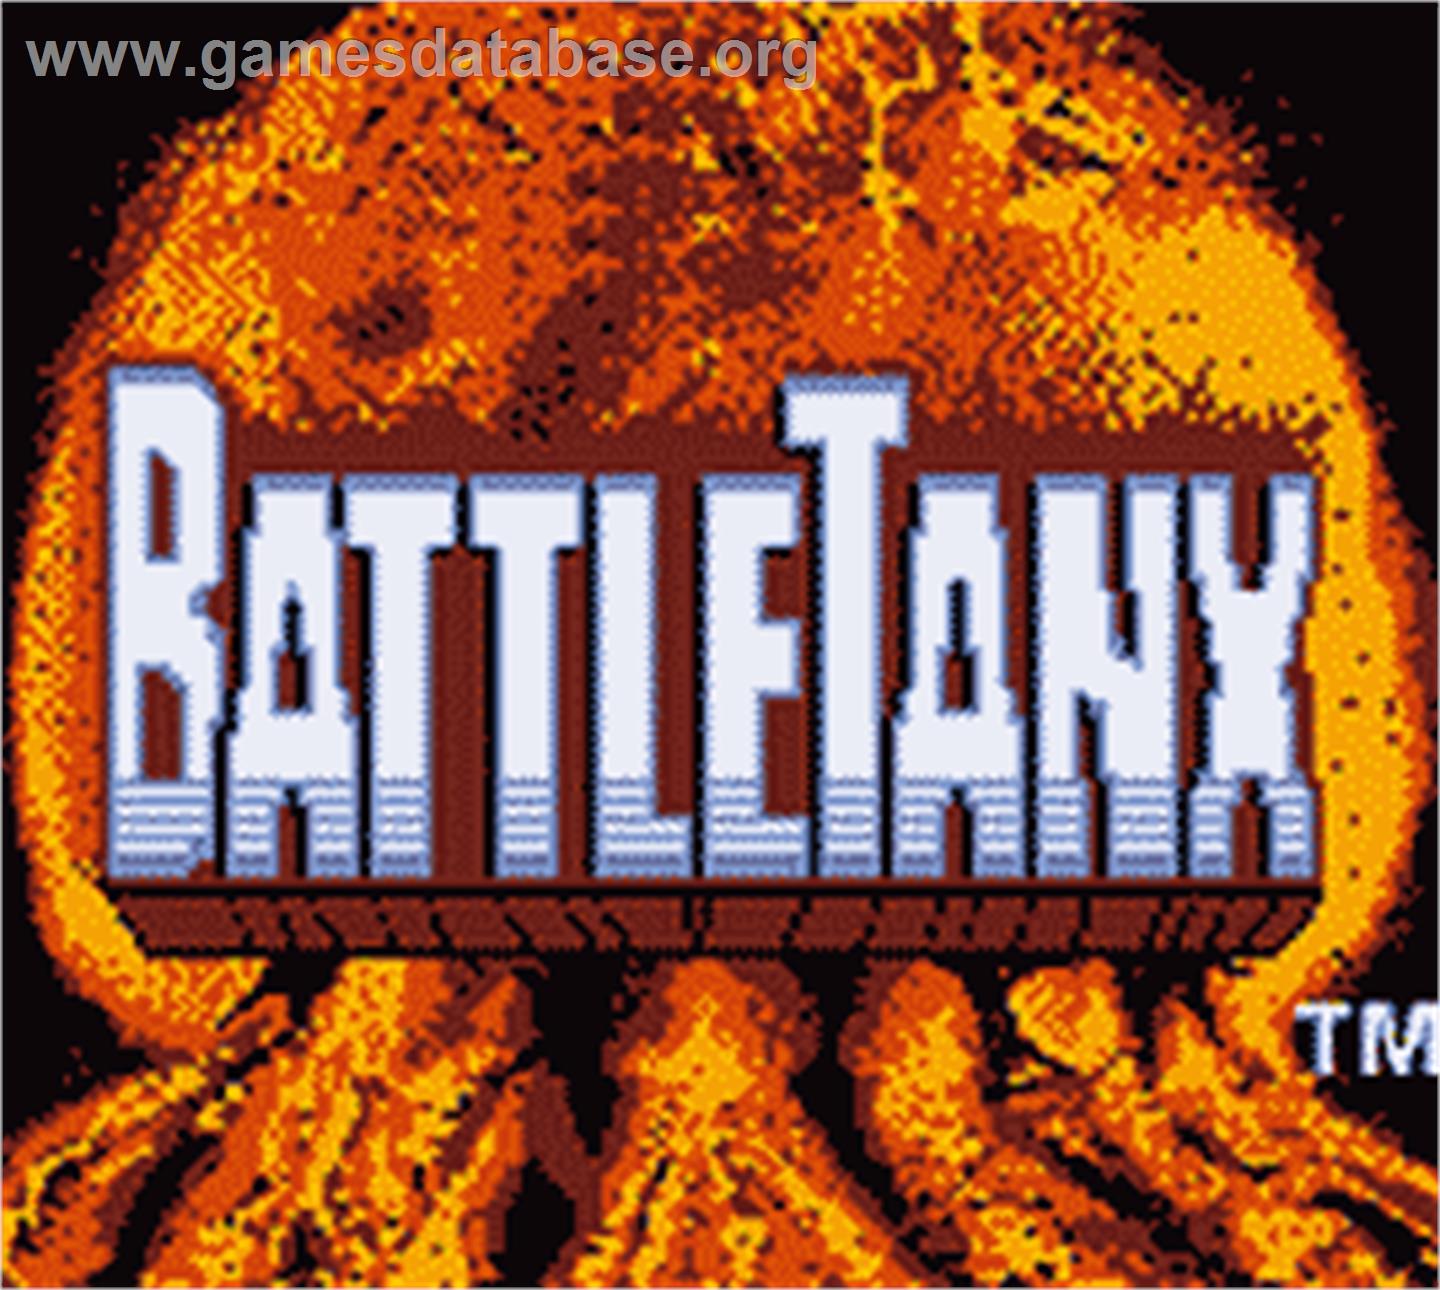 BattleTanx - Nintendo Game Boy Color - Artwork - Title Screen